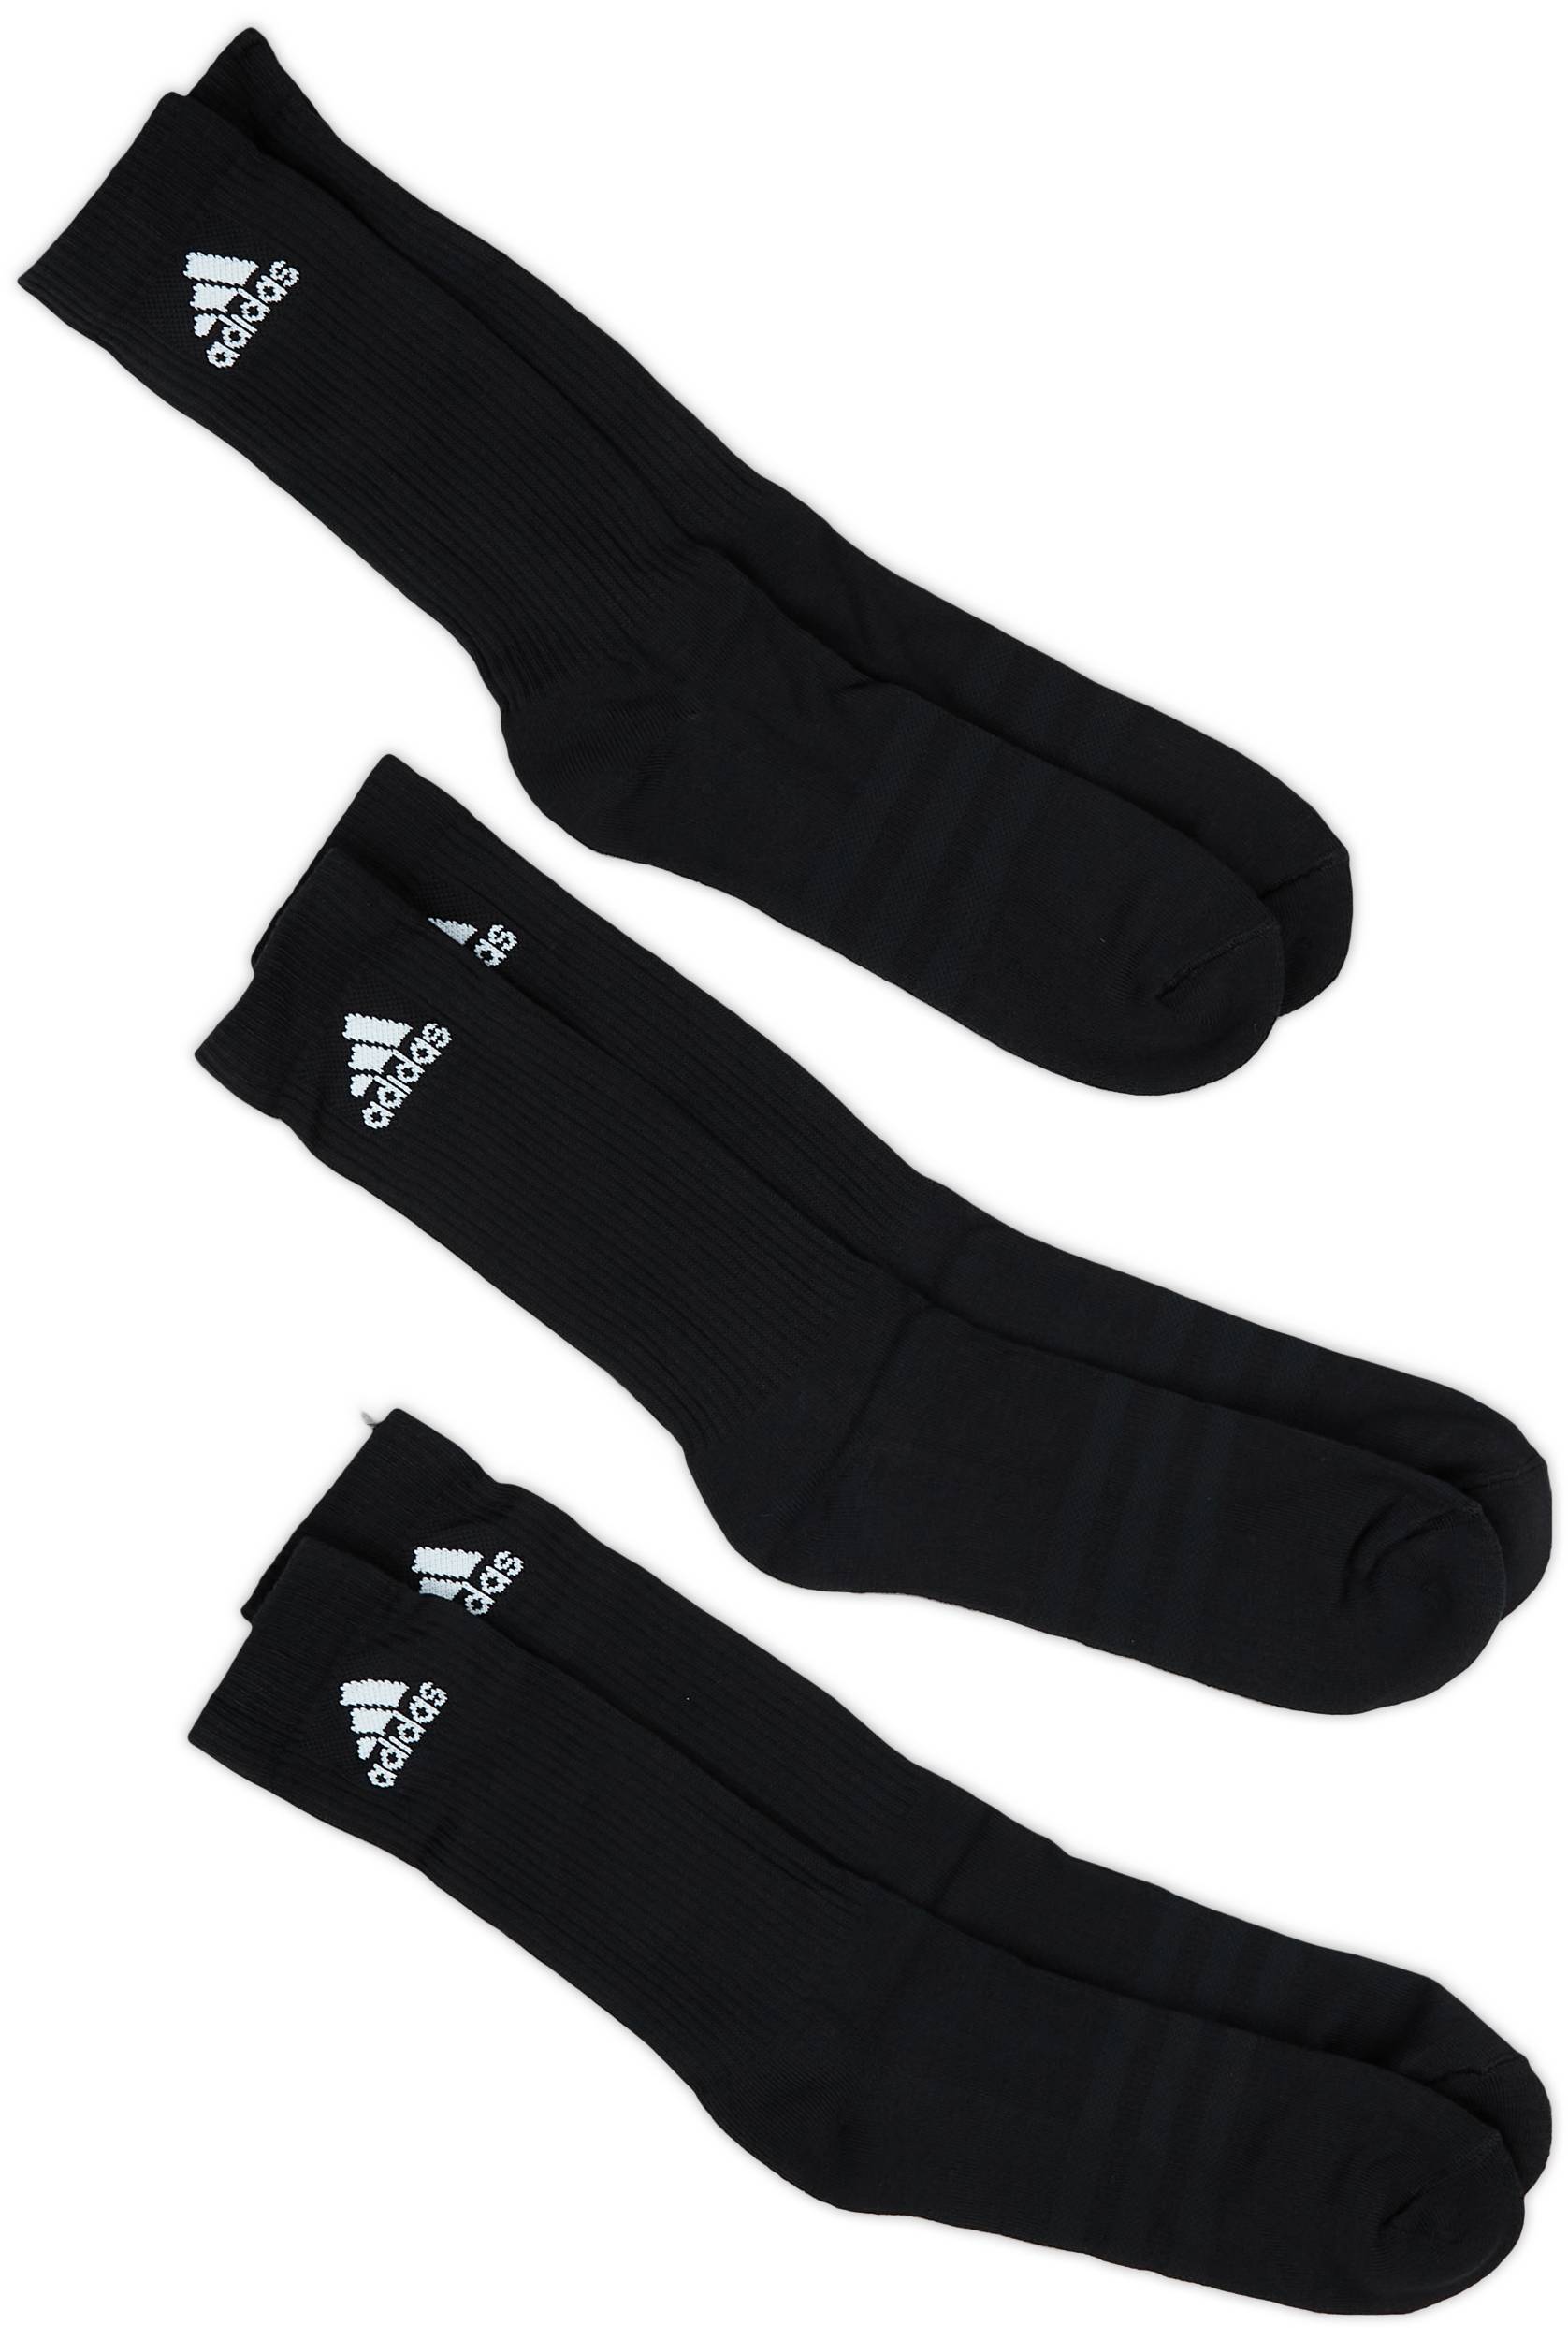 2021-22 adidas Crew Socks - Pack of 3 Pairs (L)